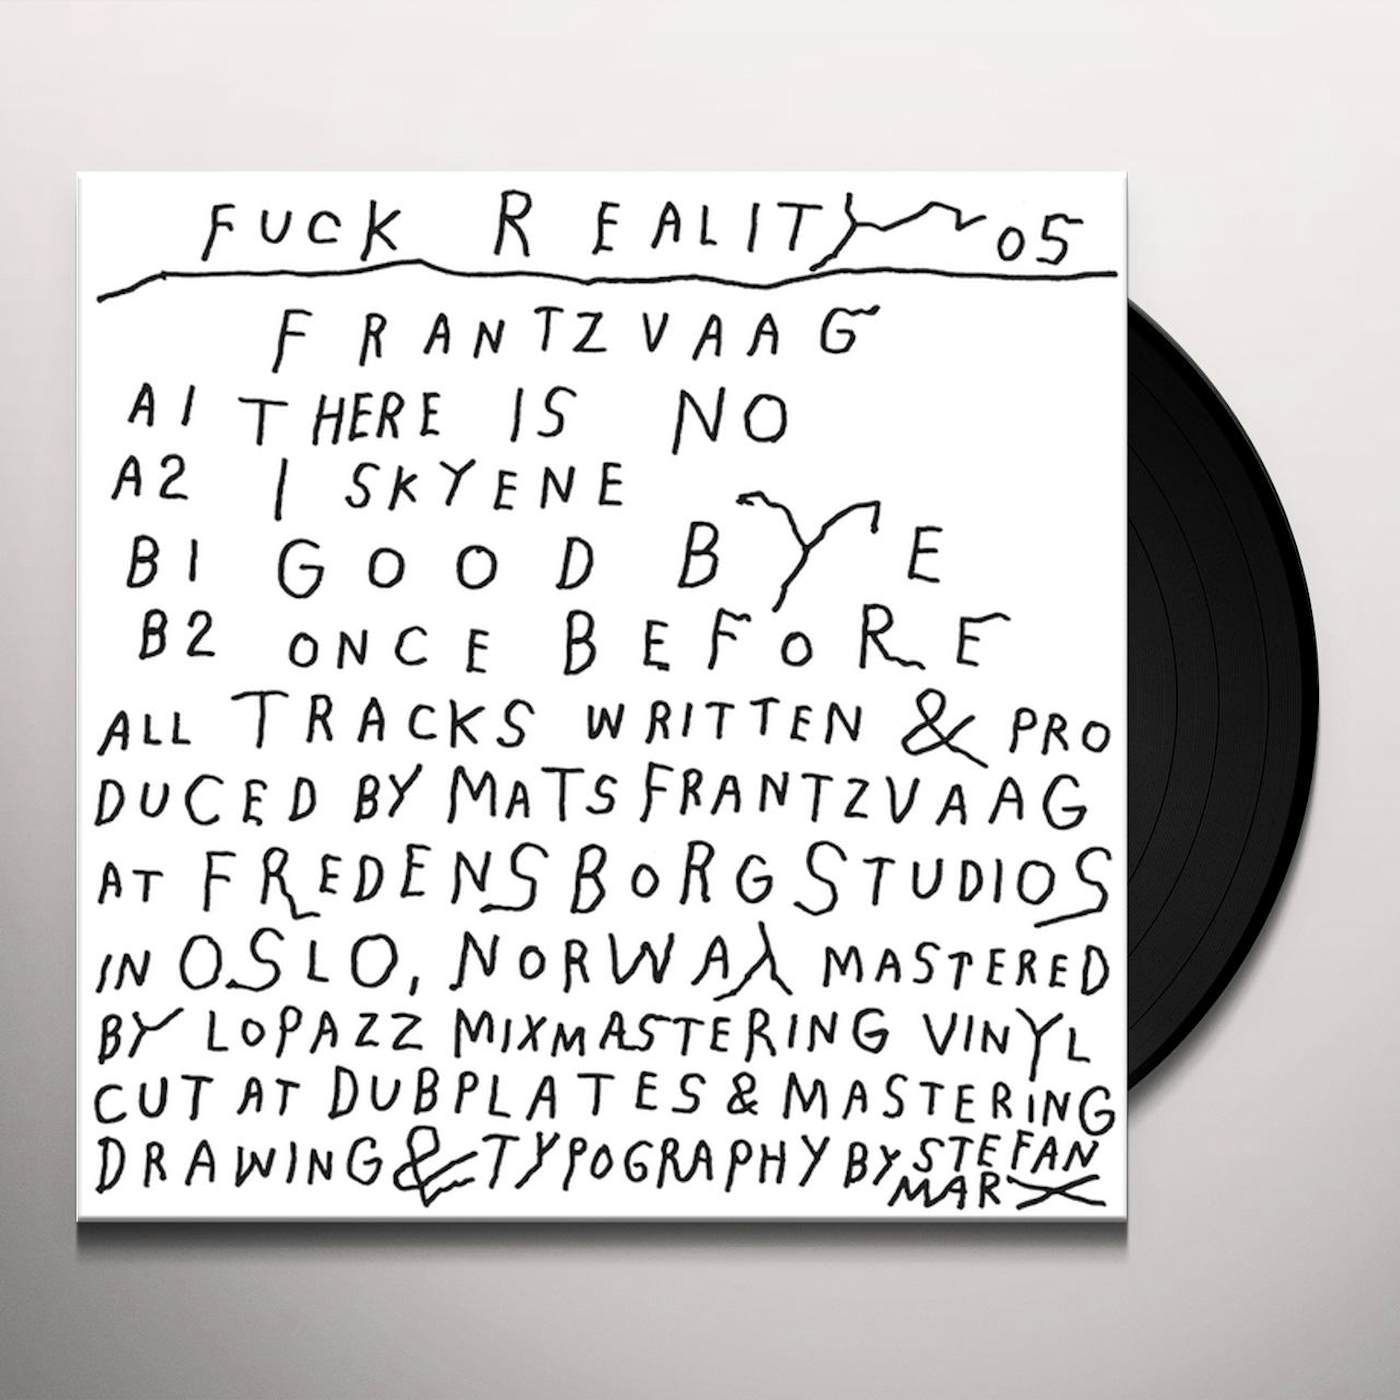 Frantzvaag FUCK REALITY 05 Vinyl Record